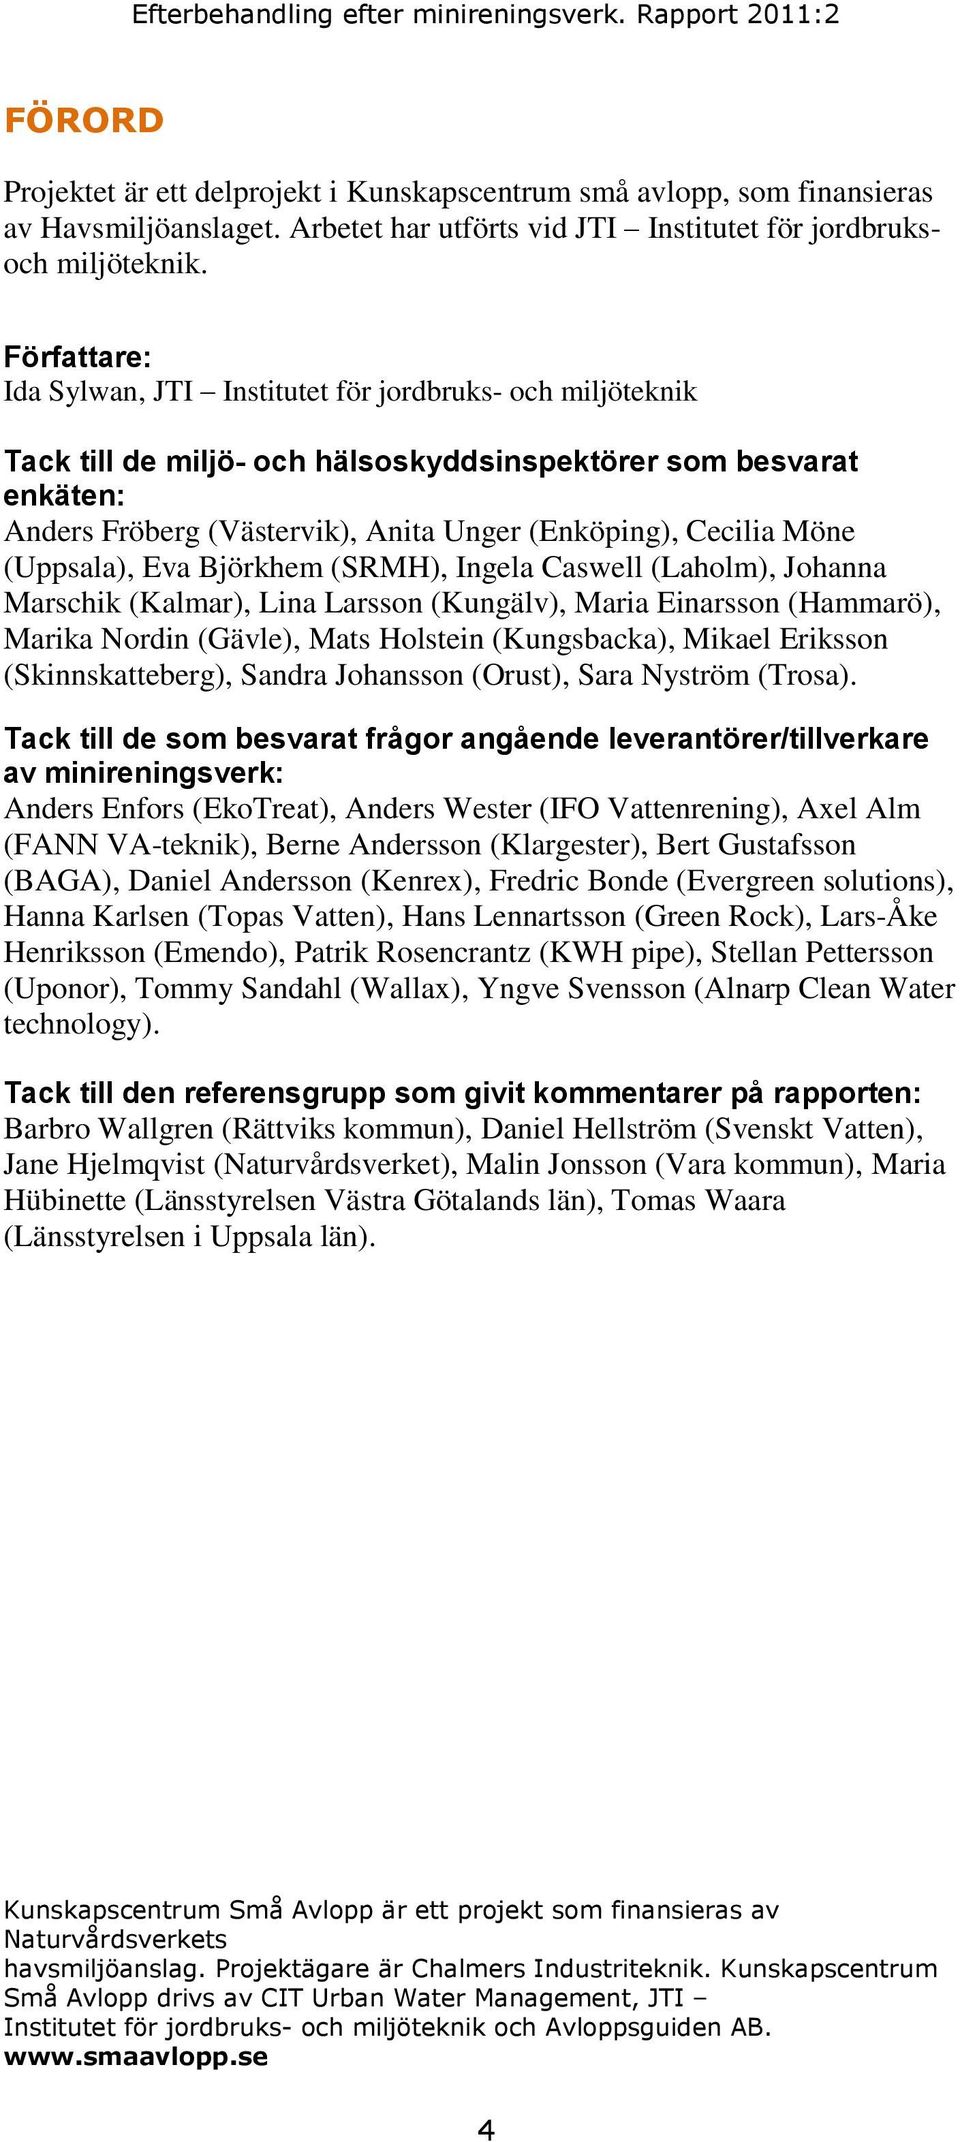 Möne (Uppsala), Eva Björkhem (SRMH), Ingela Caswell (Laholm), Johanna Marschik (Kalmar), Lina Larsson (Kungälv), Maria Einarsson (Hammarö), Marika Nordin (Gävle), Mats Holstein (Kungsbacka), Mikael